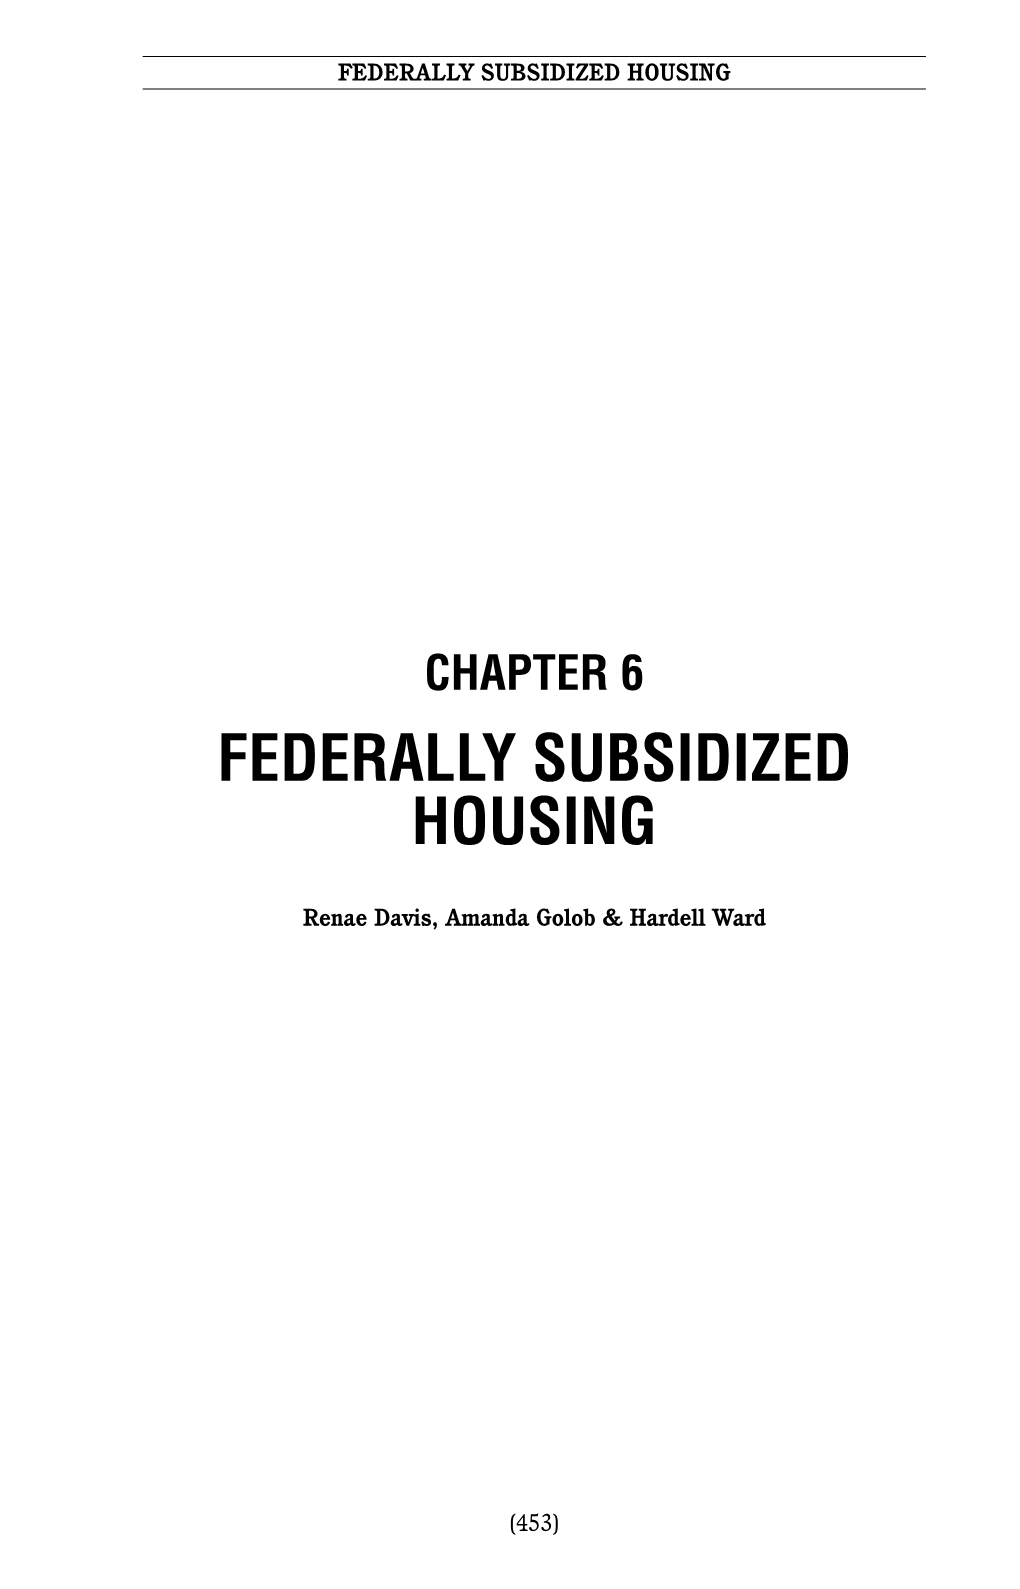 Federally Subsidized Housing